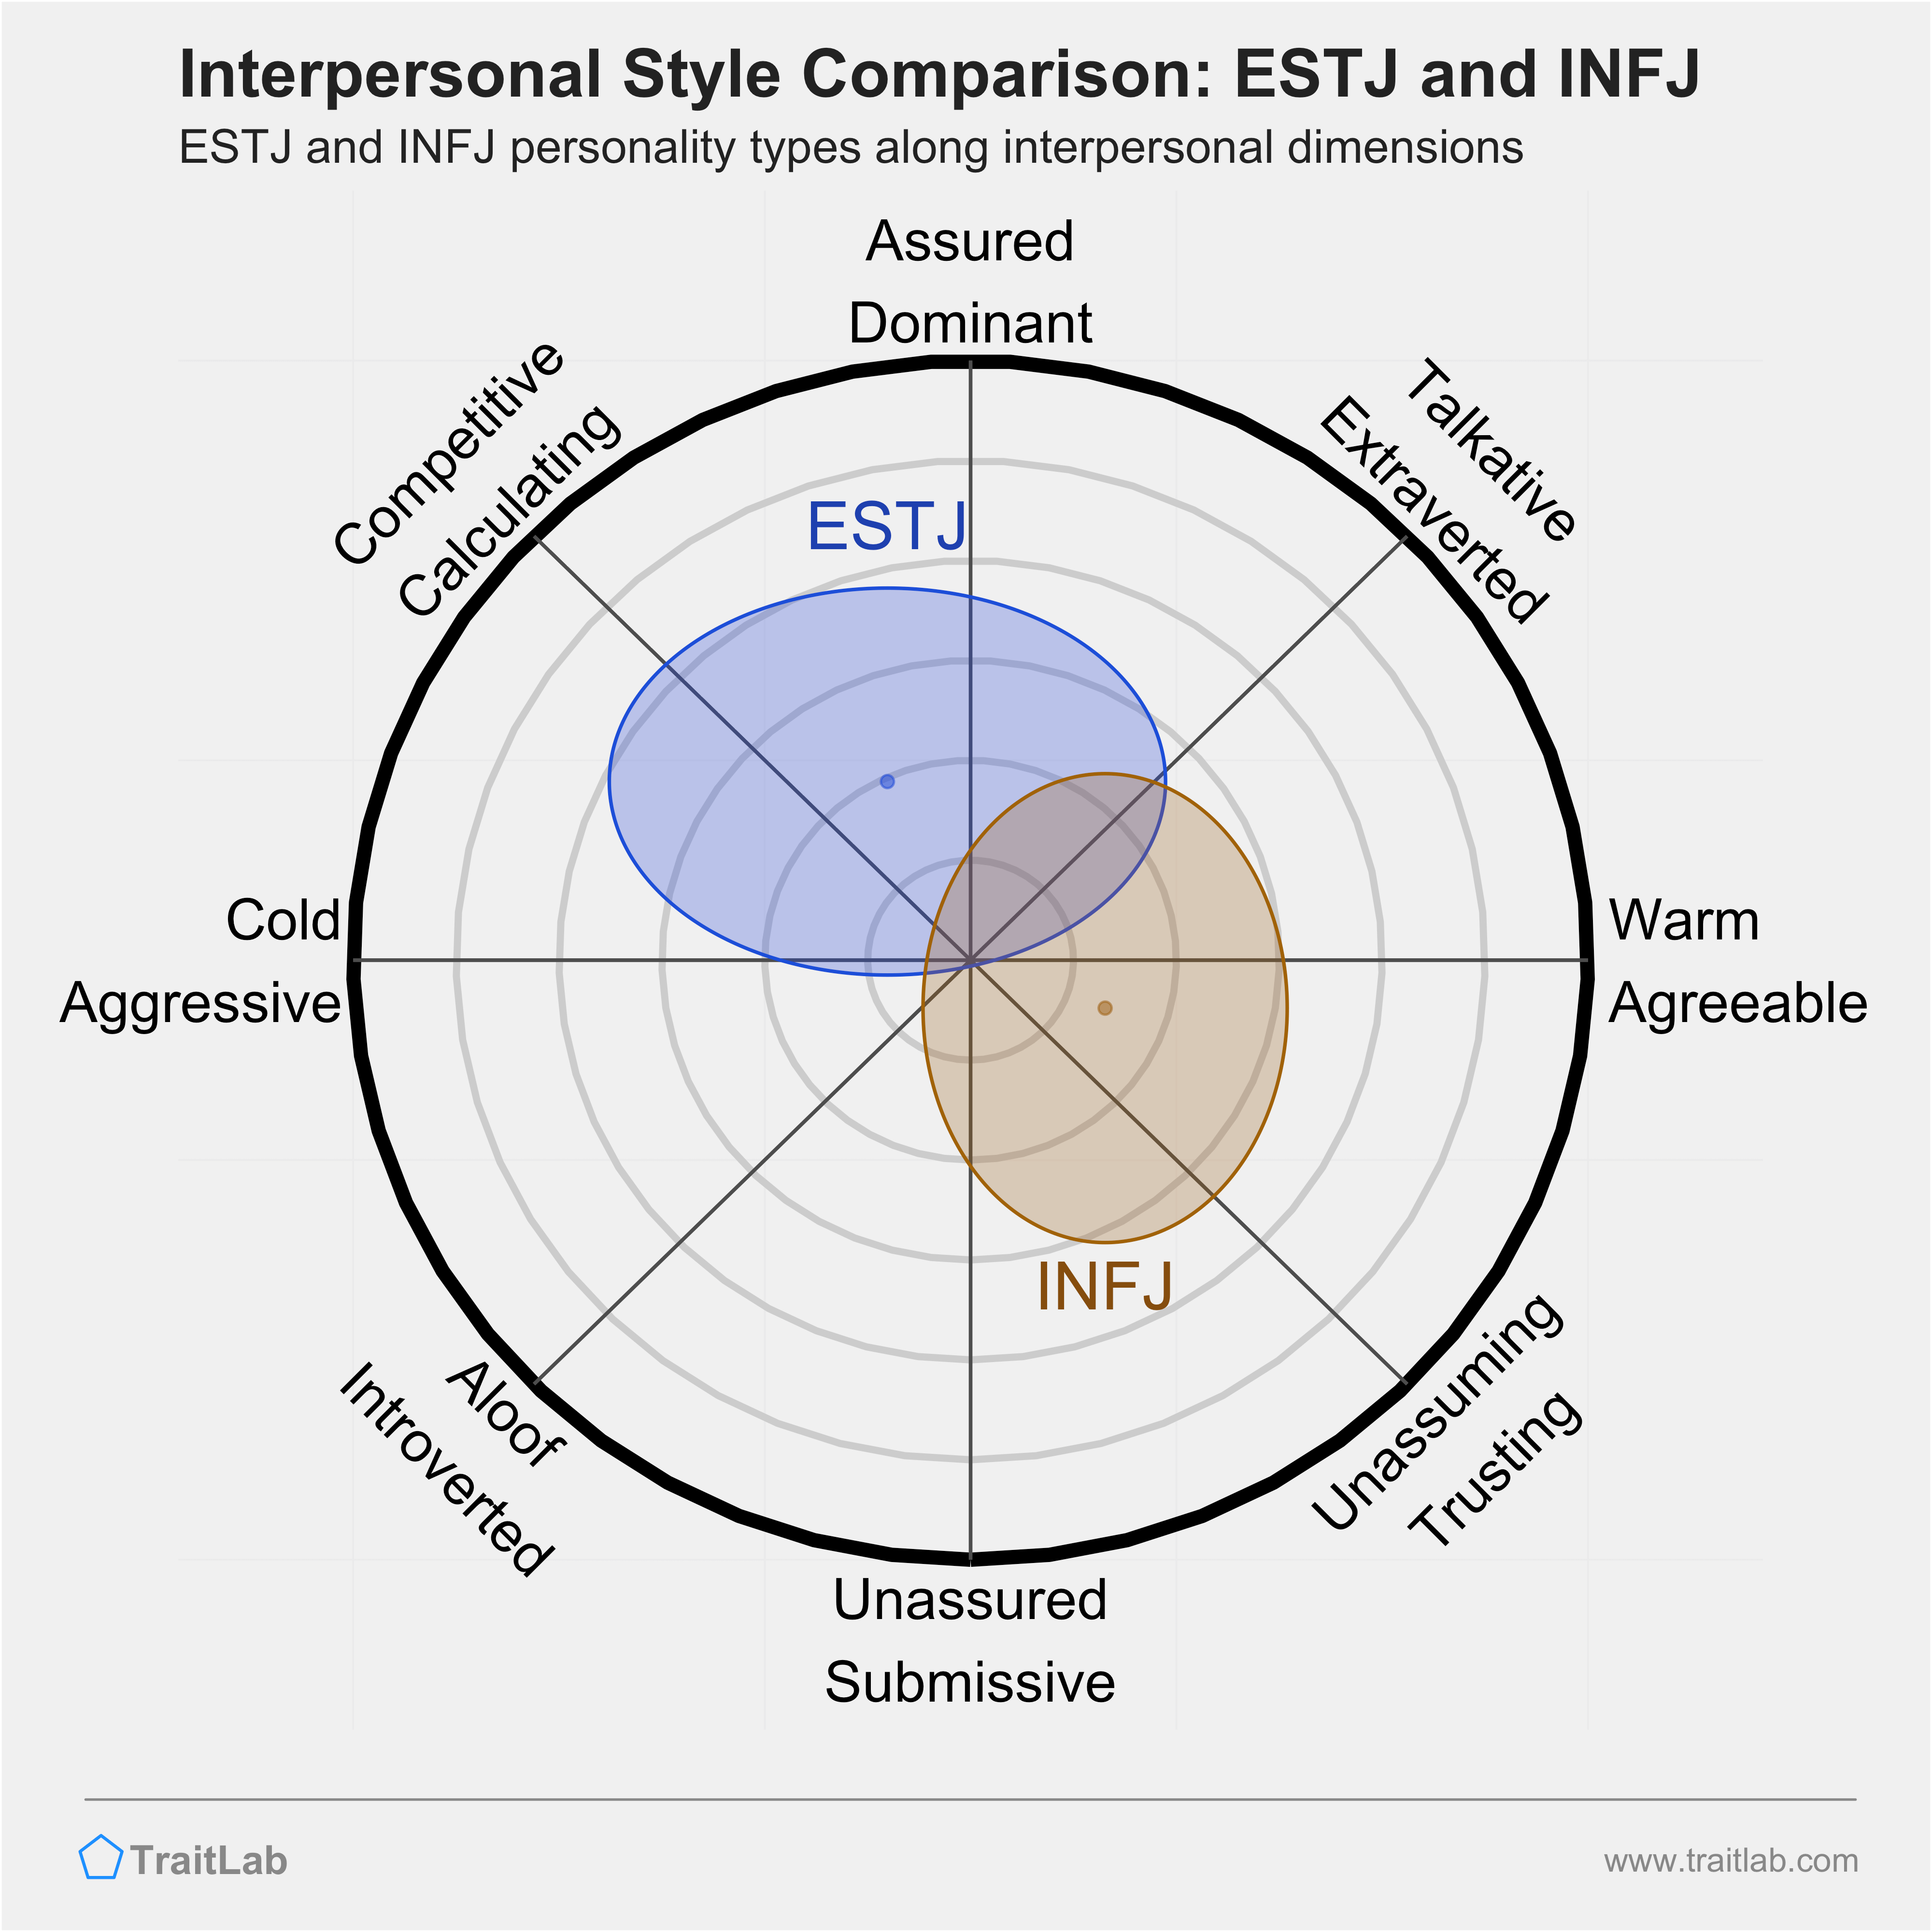 ESTJ and INFJ comparison across interpersonal dimensions